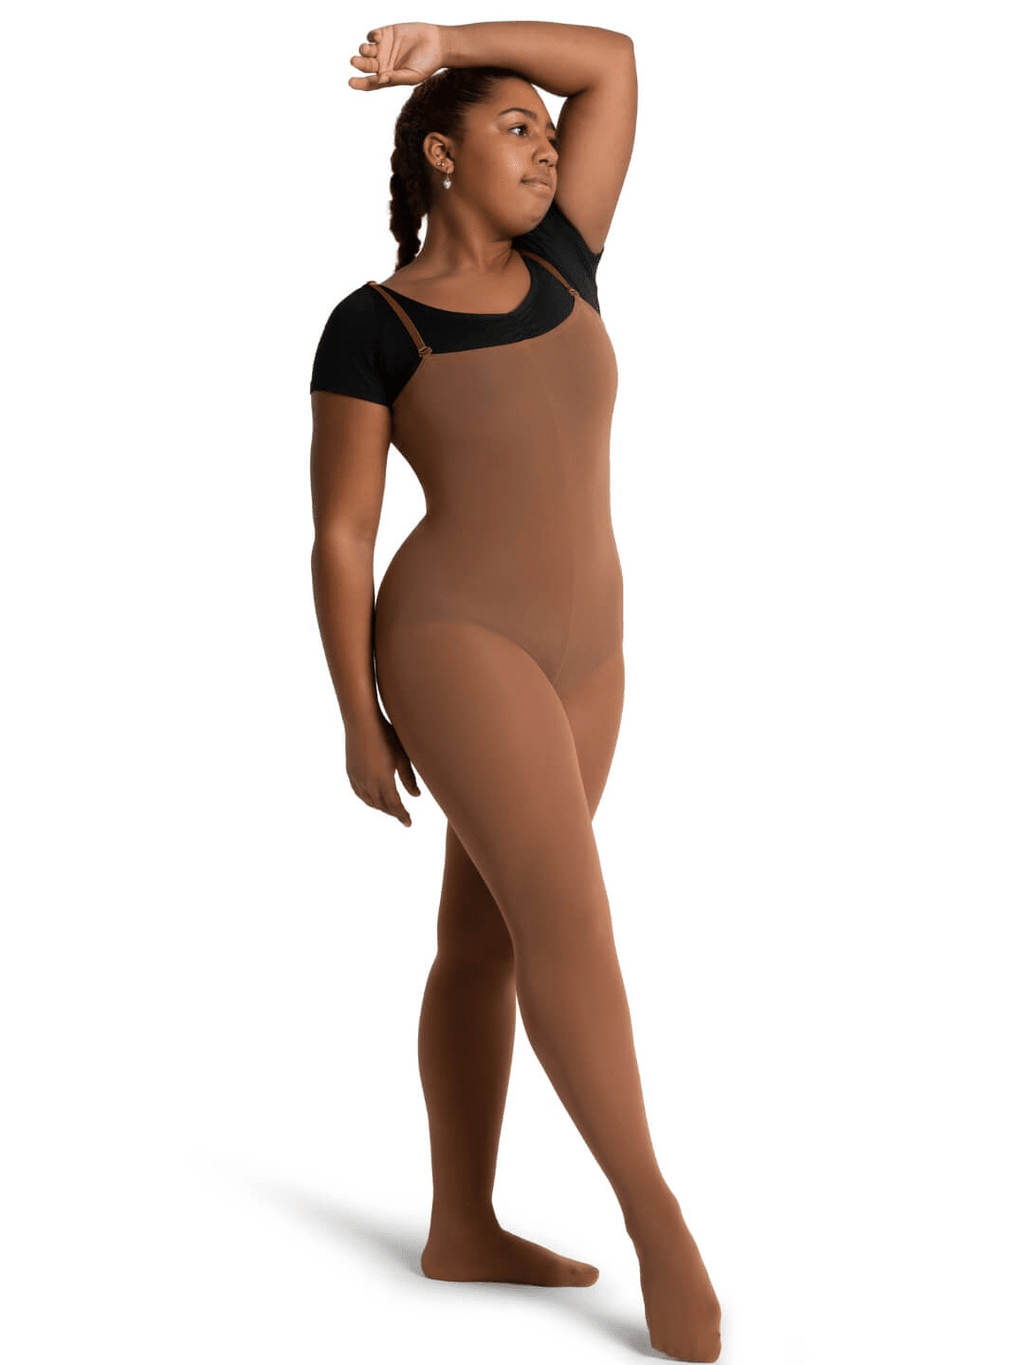 Capezio Black Women's Convertible Body Tight, Large/X-Large